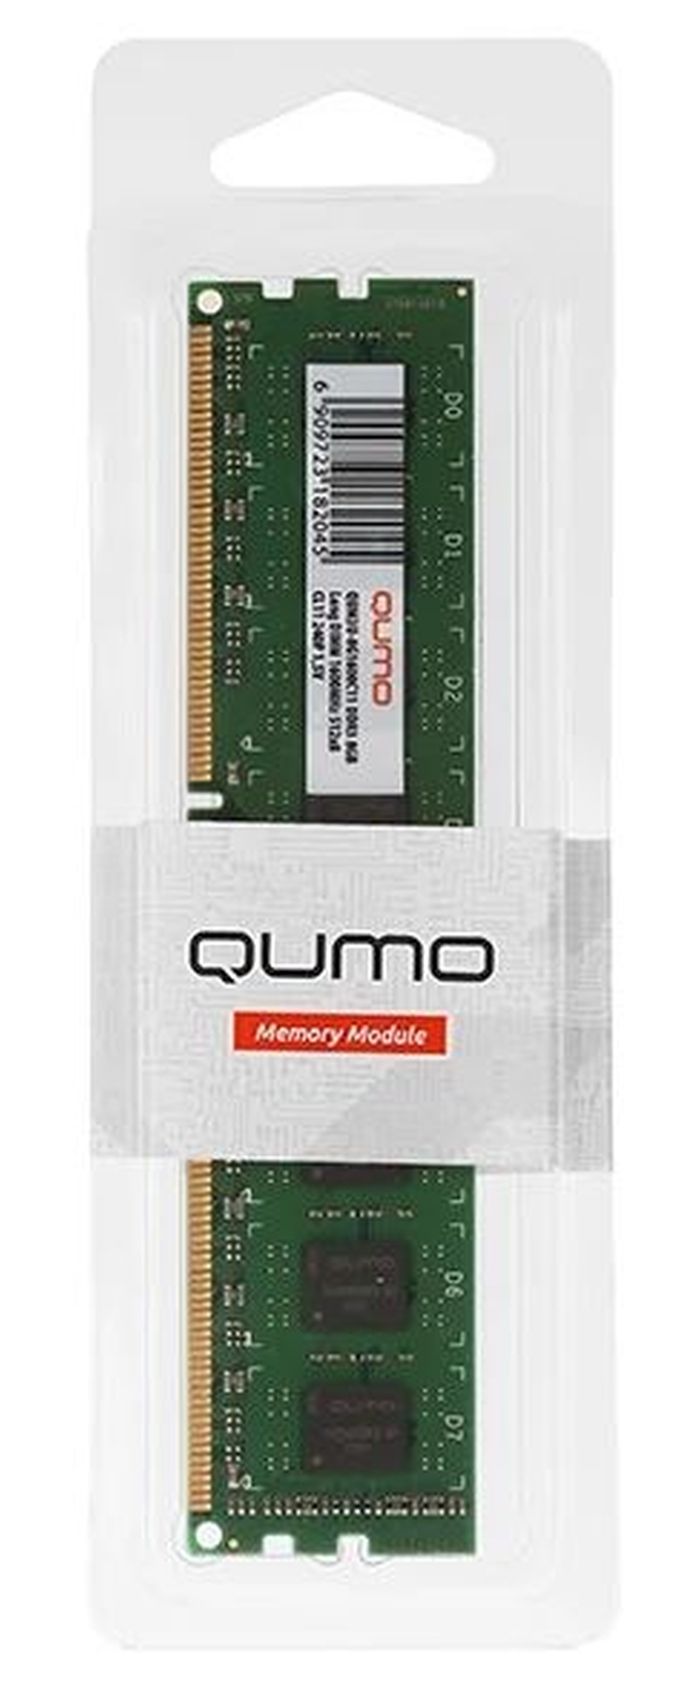 Оперативная память QUMO DDR3 DIMM 4GB 1333MHz (QUM3U-4G1333C9) used kingston memoria ddr3 4gb 1333mhz rams kvr1333d3n9 4g 4gb 1333mhz ddr3 ram desktop memory for amd and intel 1pcs